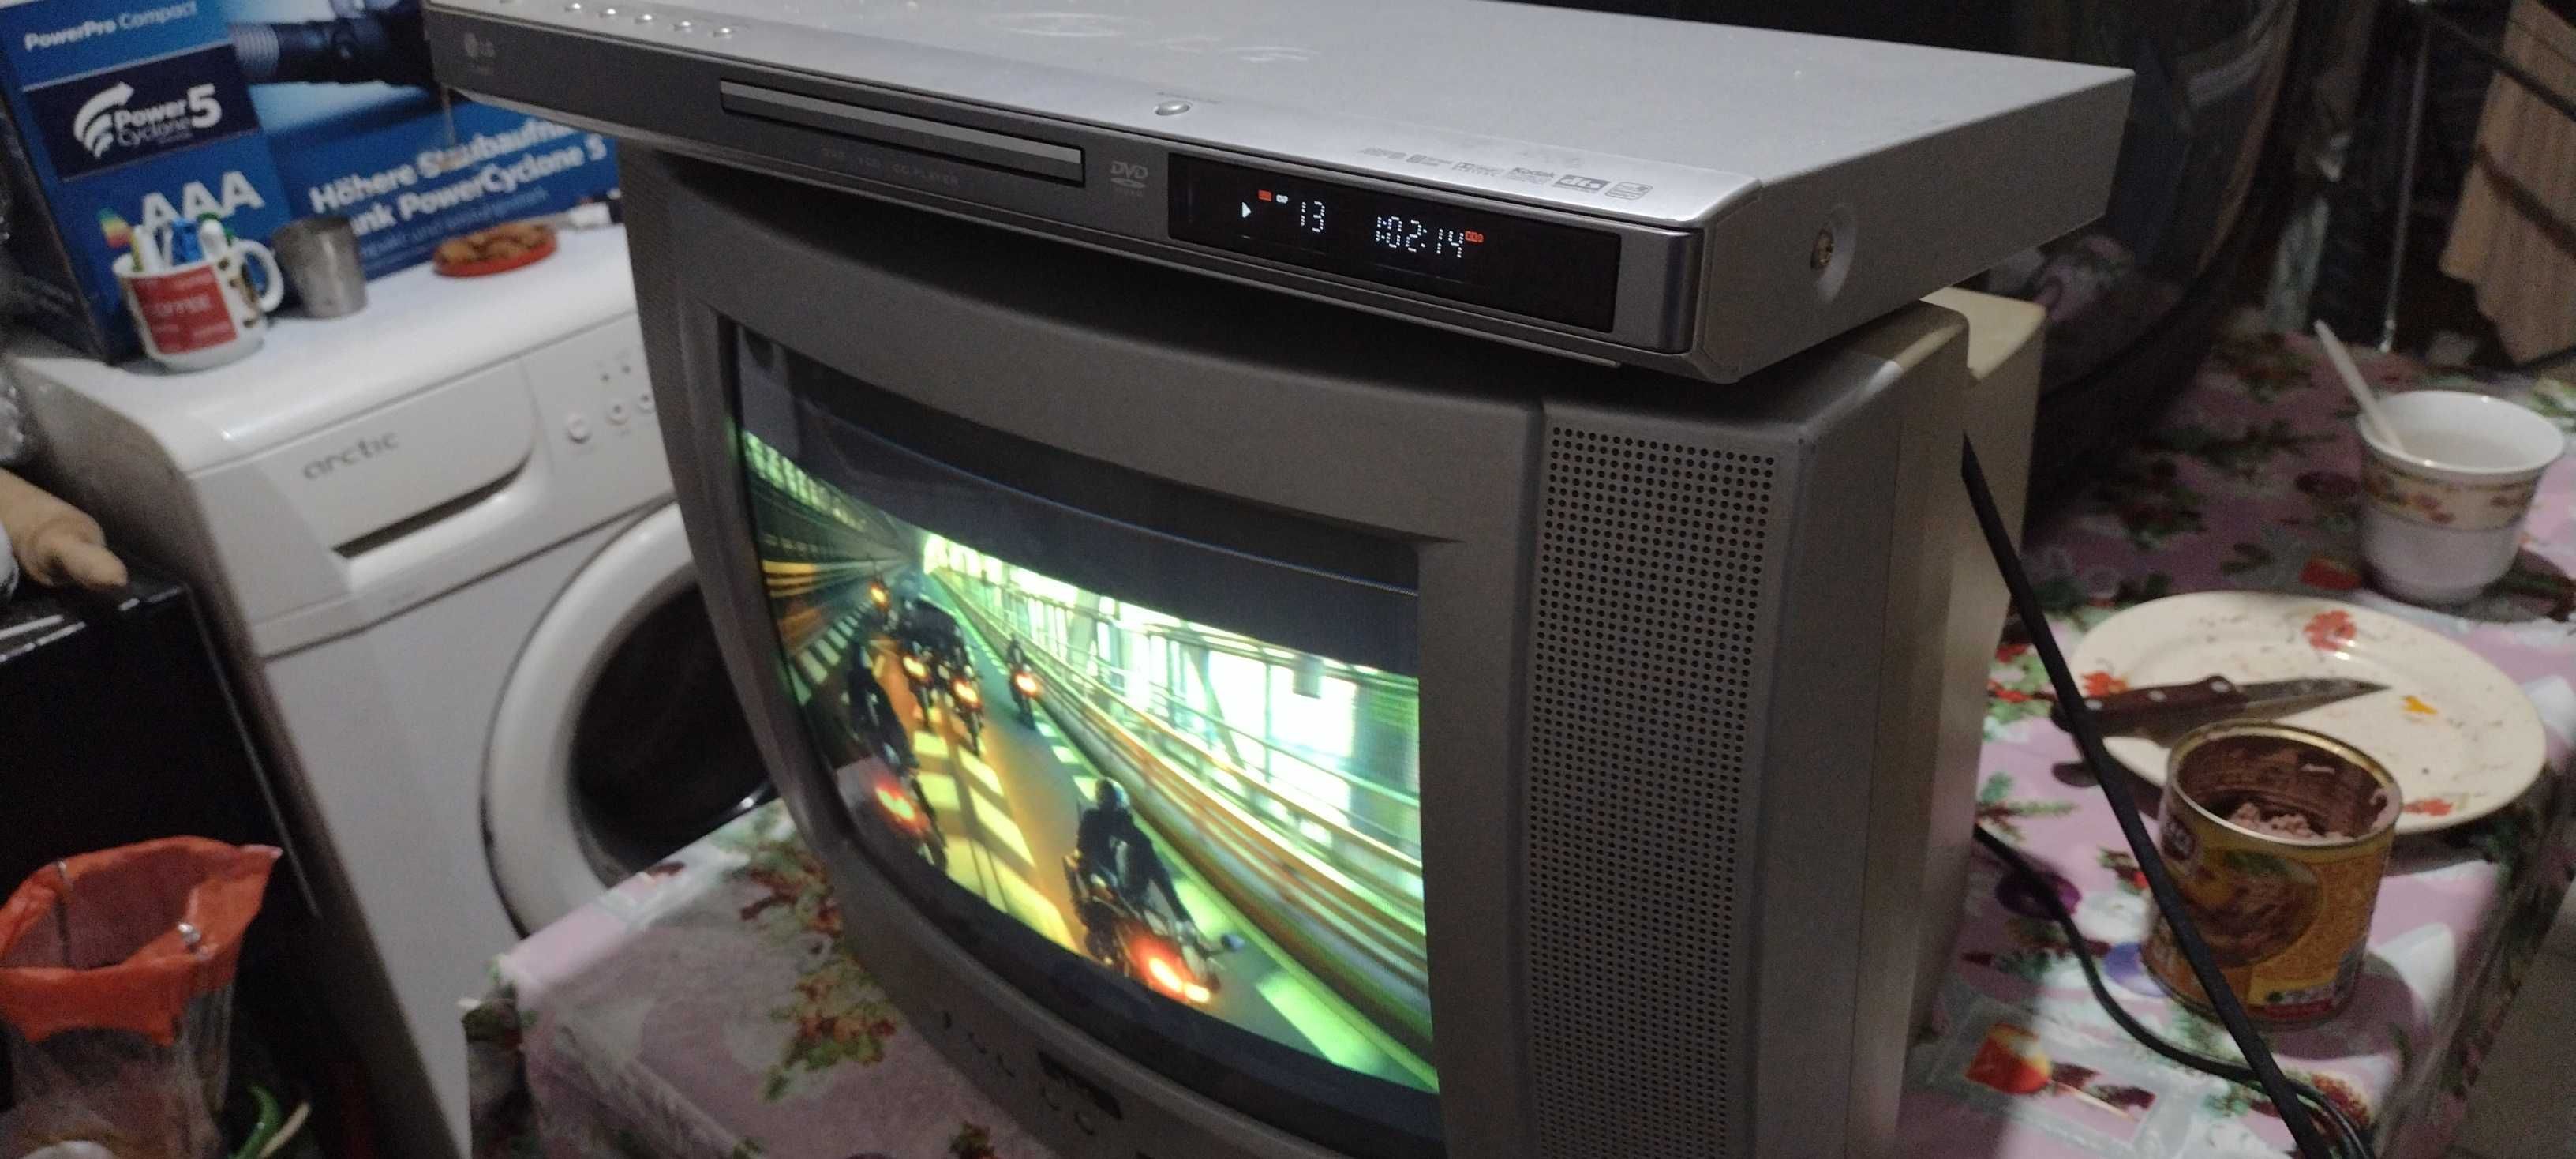 Vând Tv color SEG Model:CT1402-S și DVD player LG model:DV8600c+10sd f